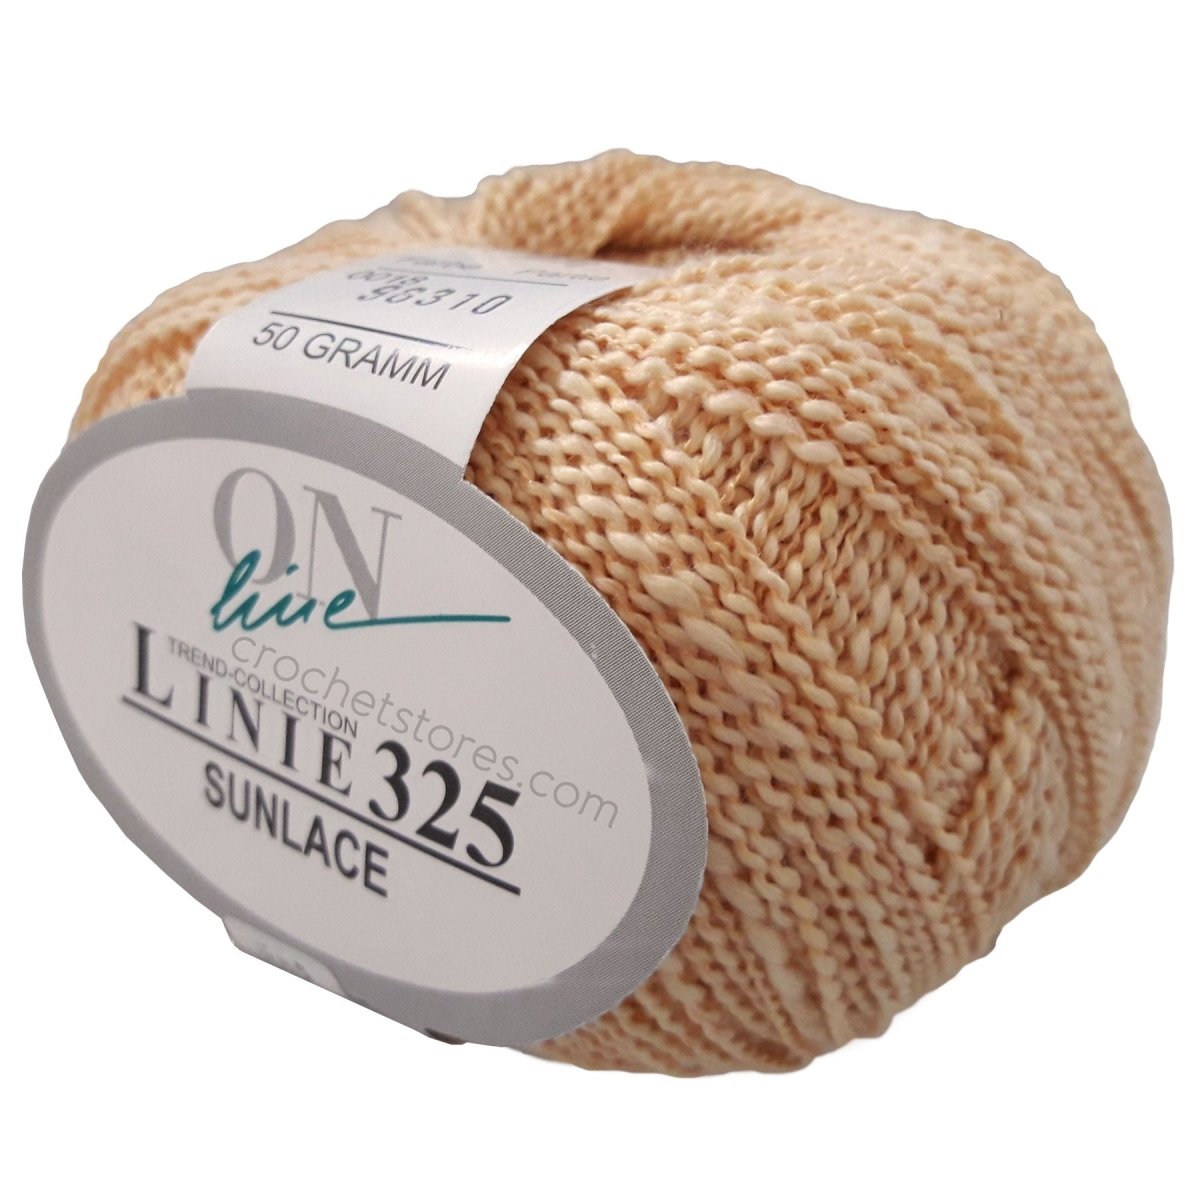 SUNLACE - Crochetstores110325-0184014366143970